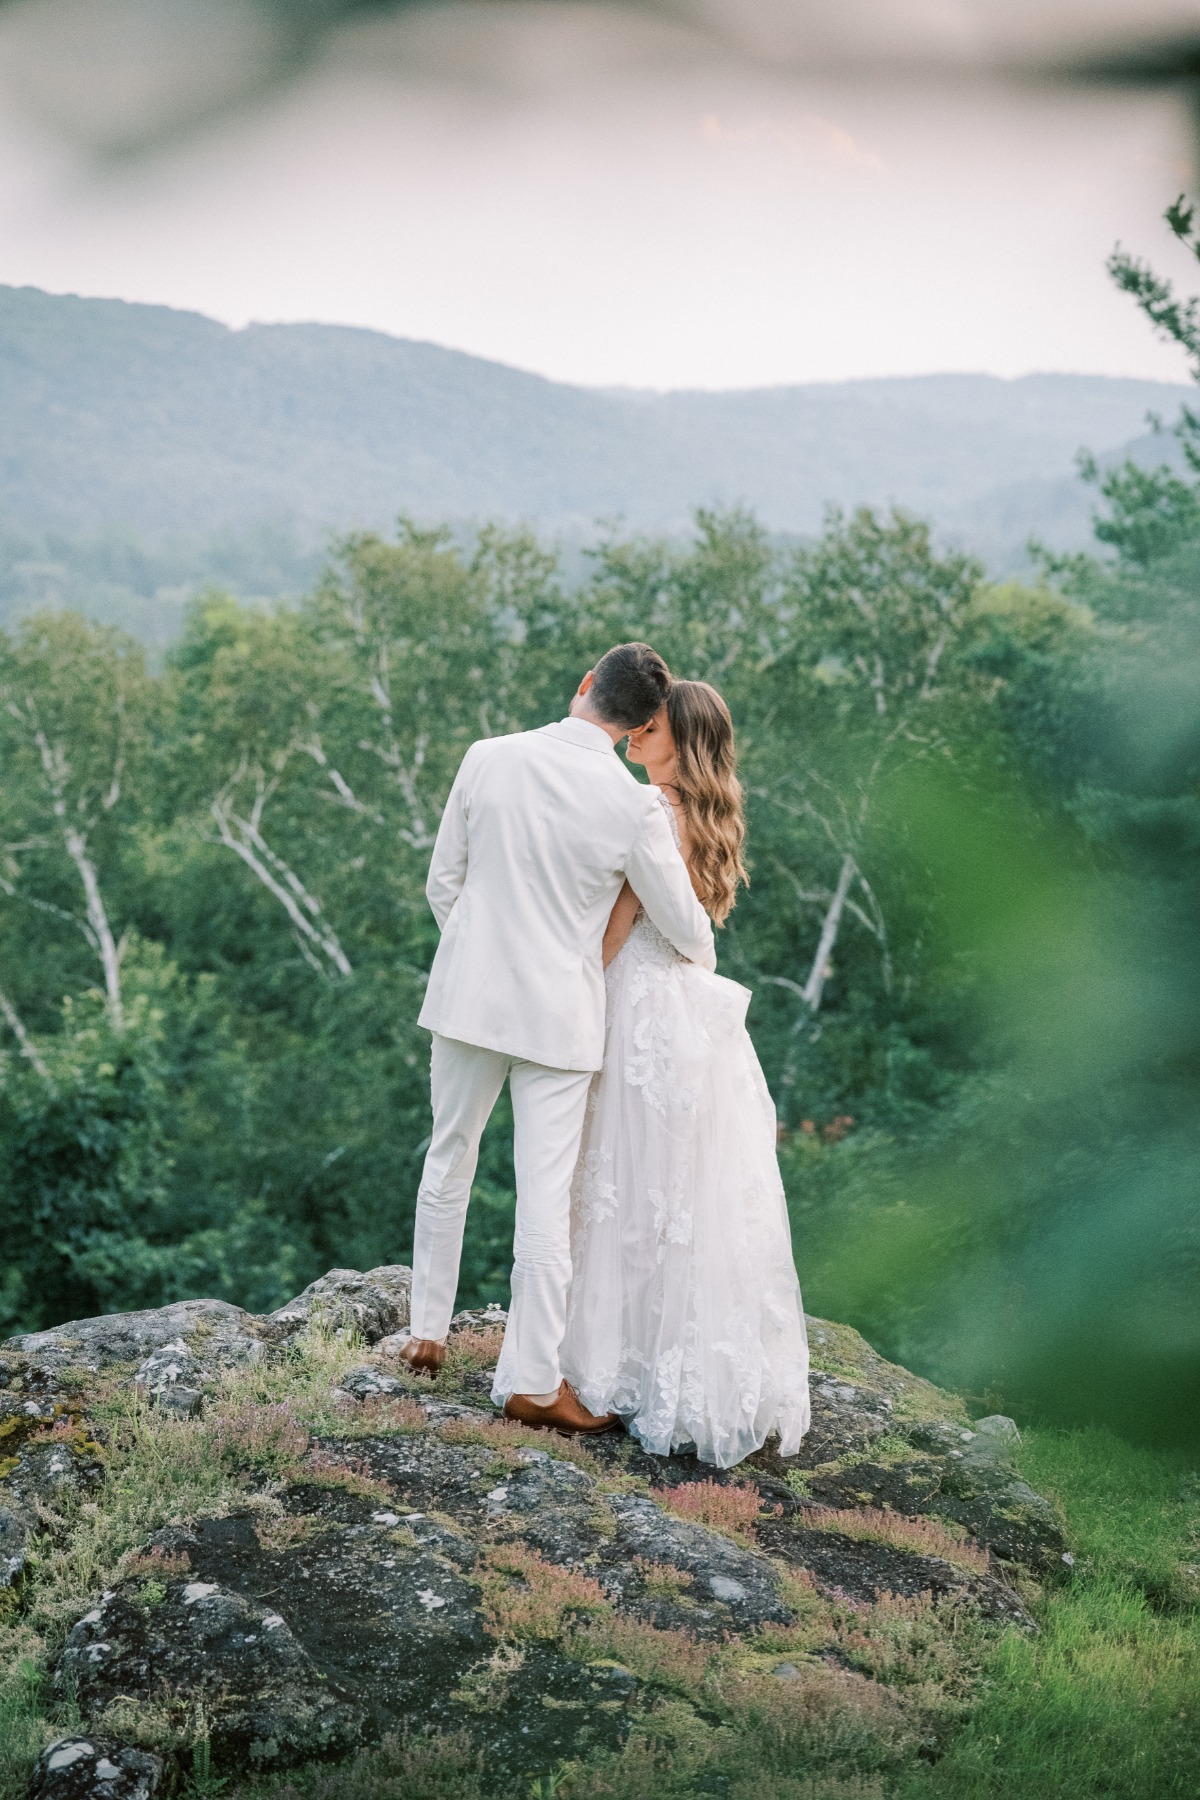 Romantic golden hour wedding portraits in Vermont countryside